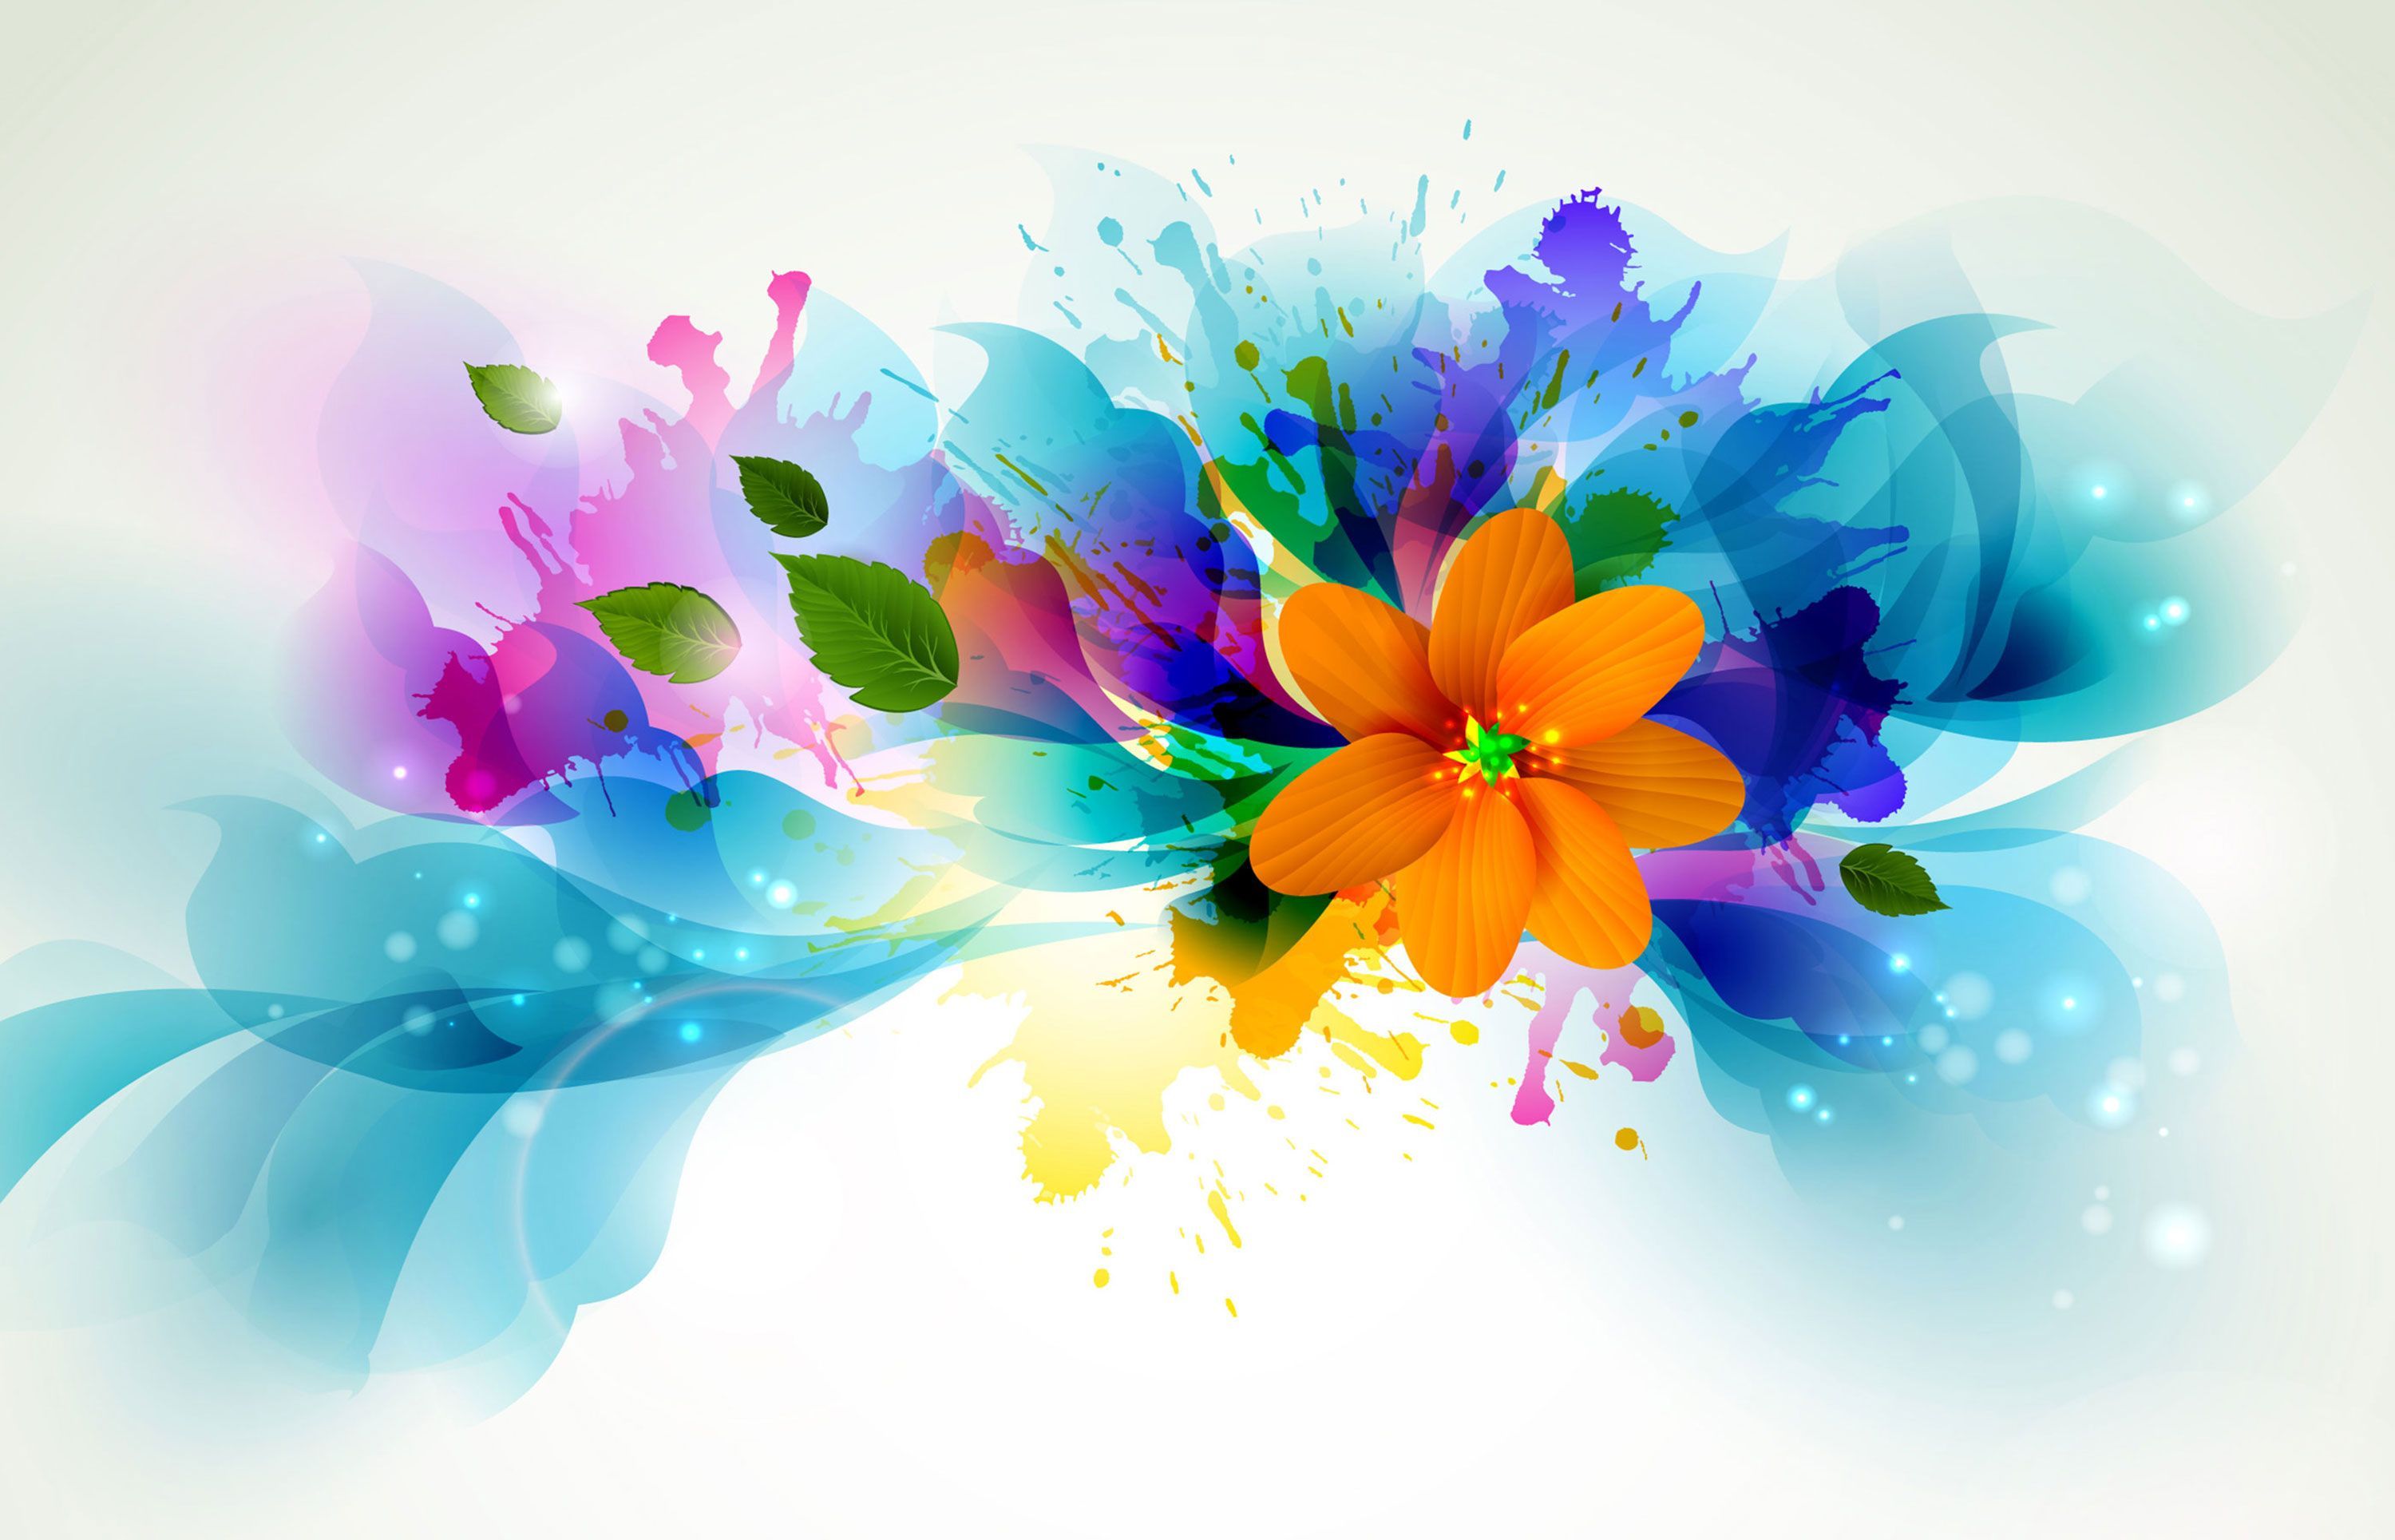 Spring Flowers 3D Parallax HD Apps on Google Play. Çiçek, Duvar kağıtları, Duvar